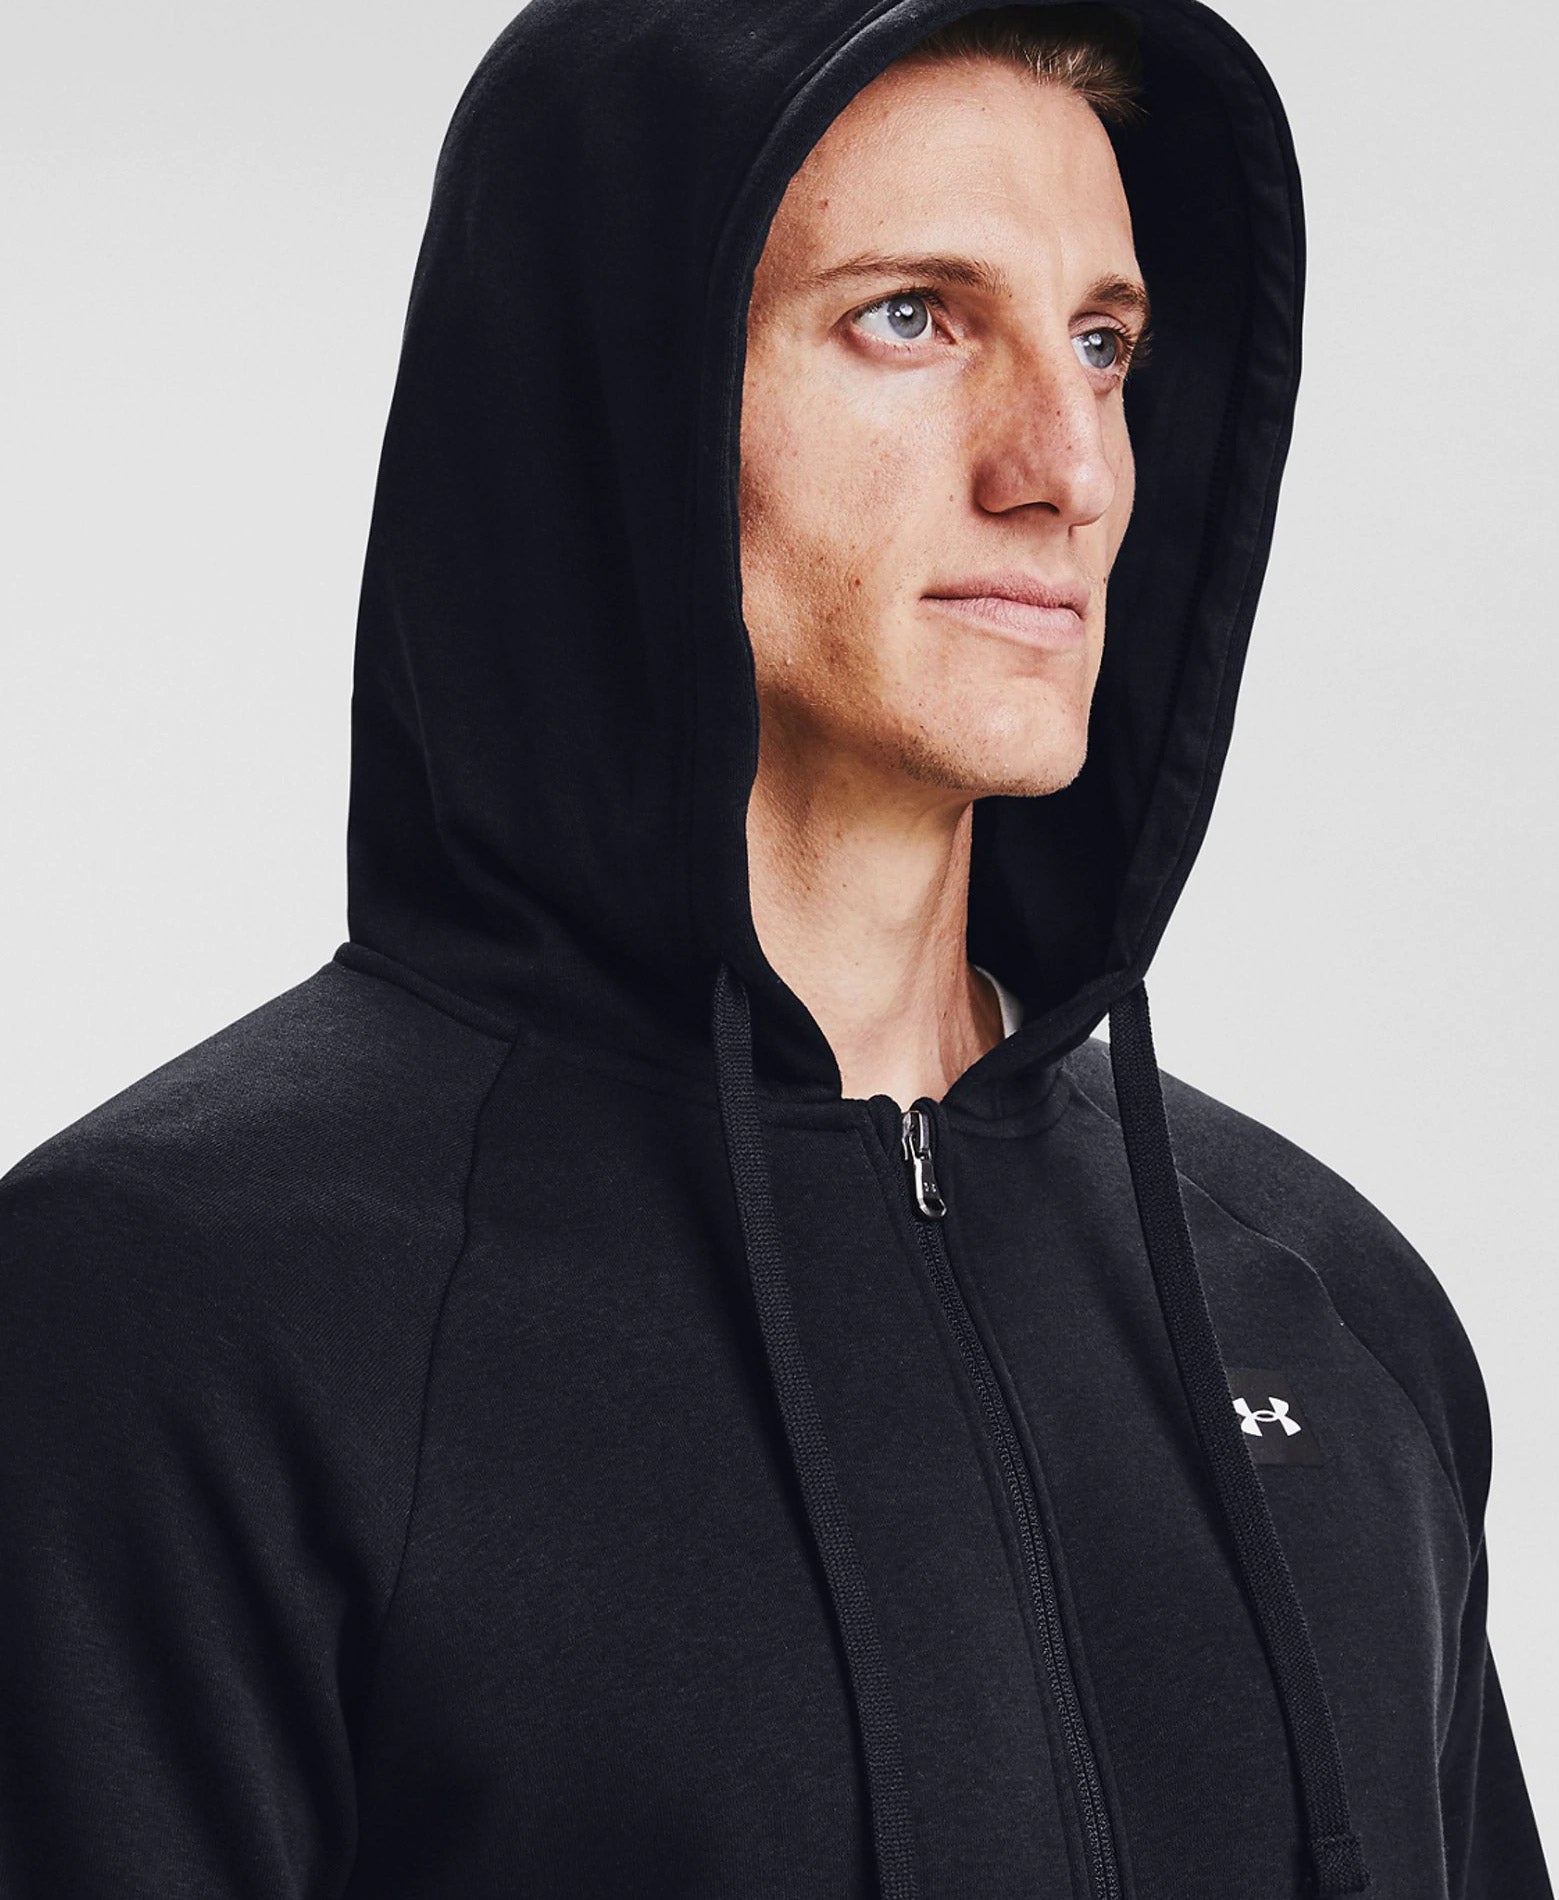 Rival fleece fz hoodie for men - black